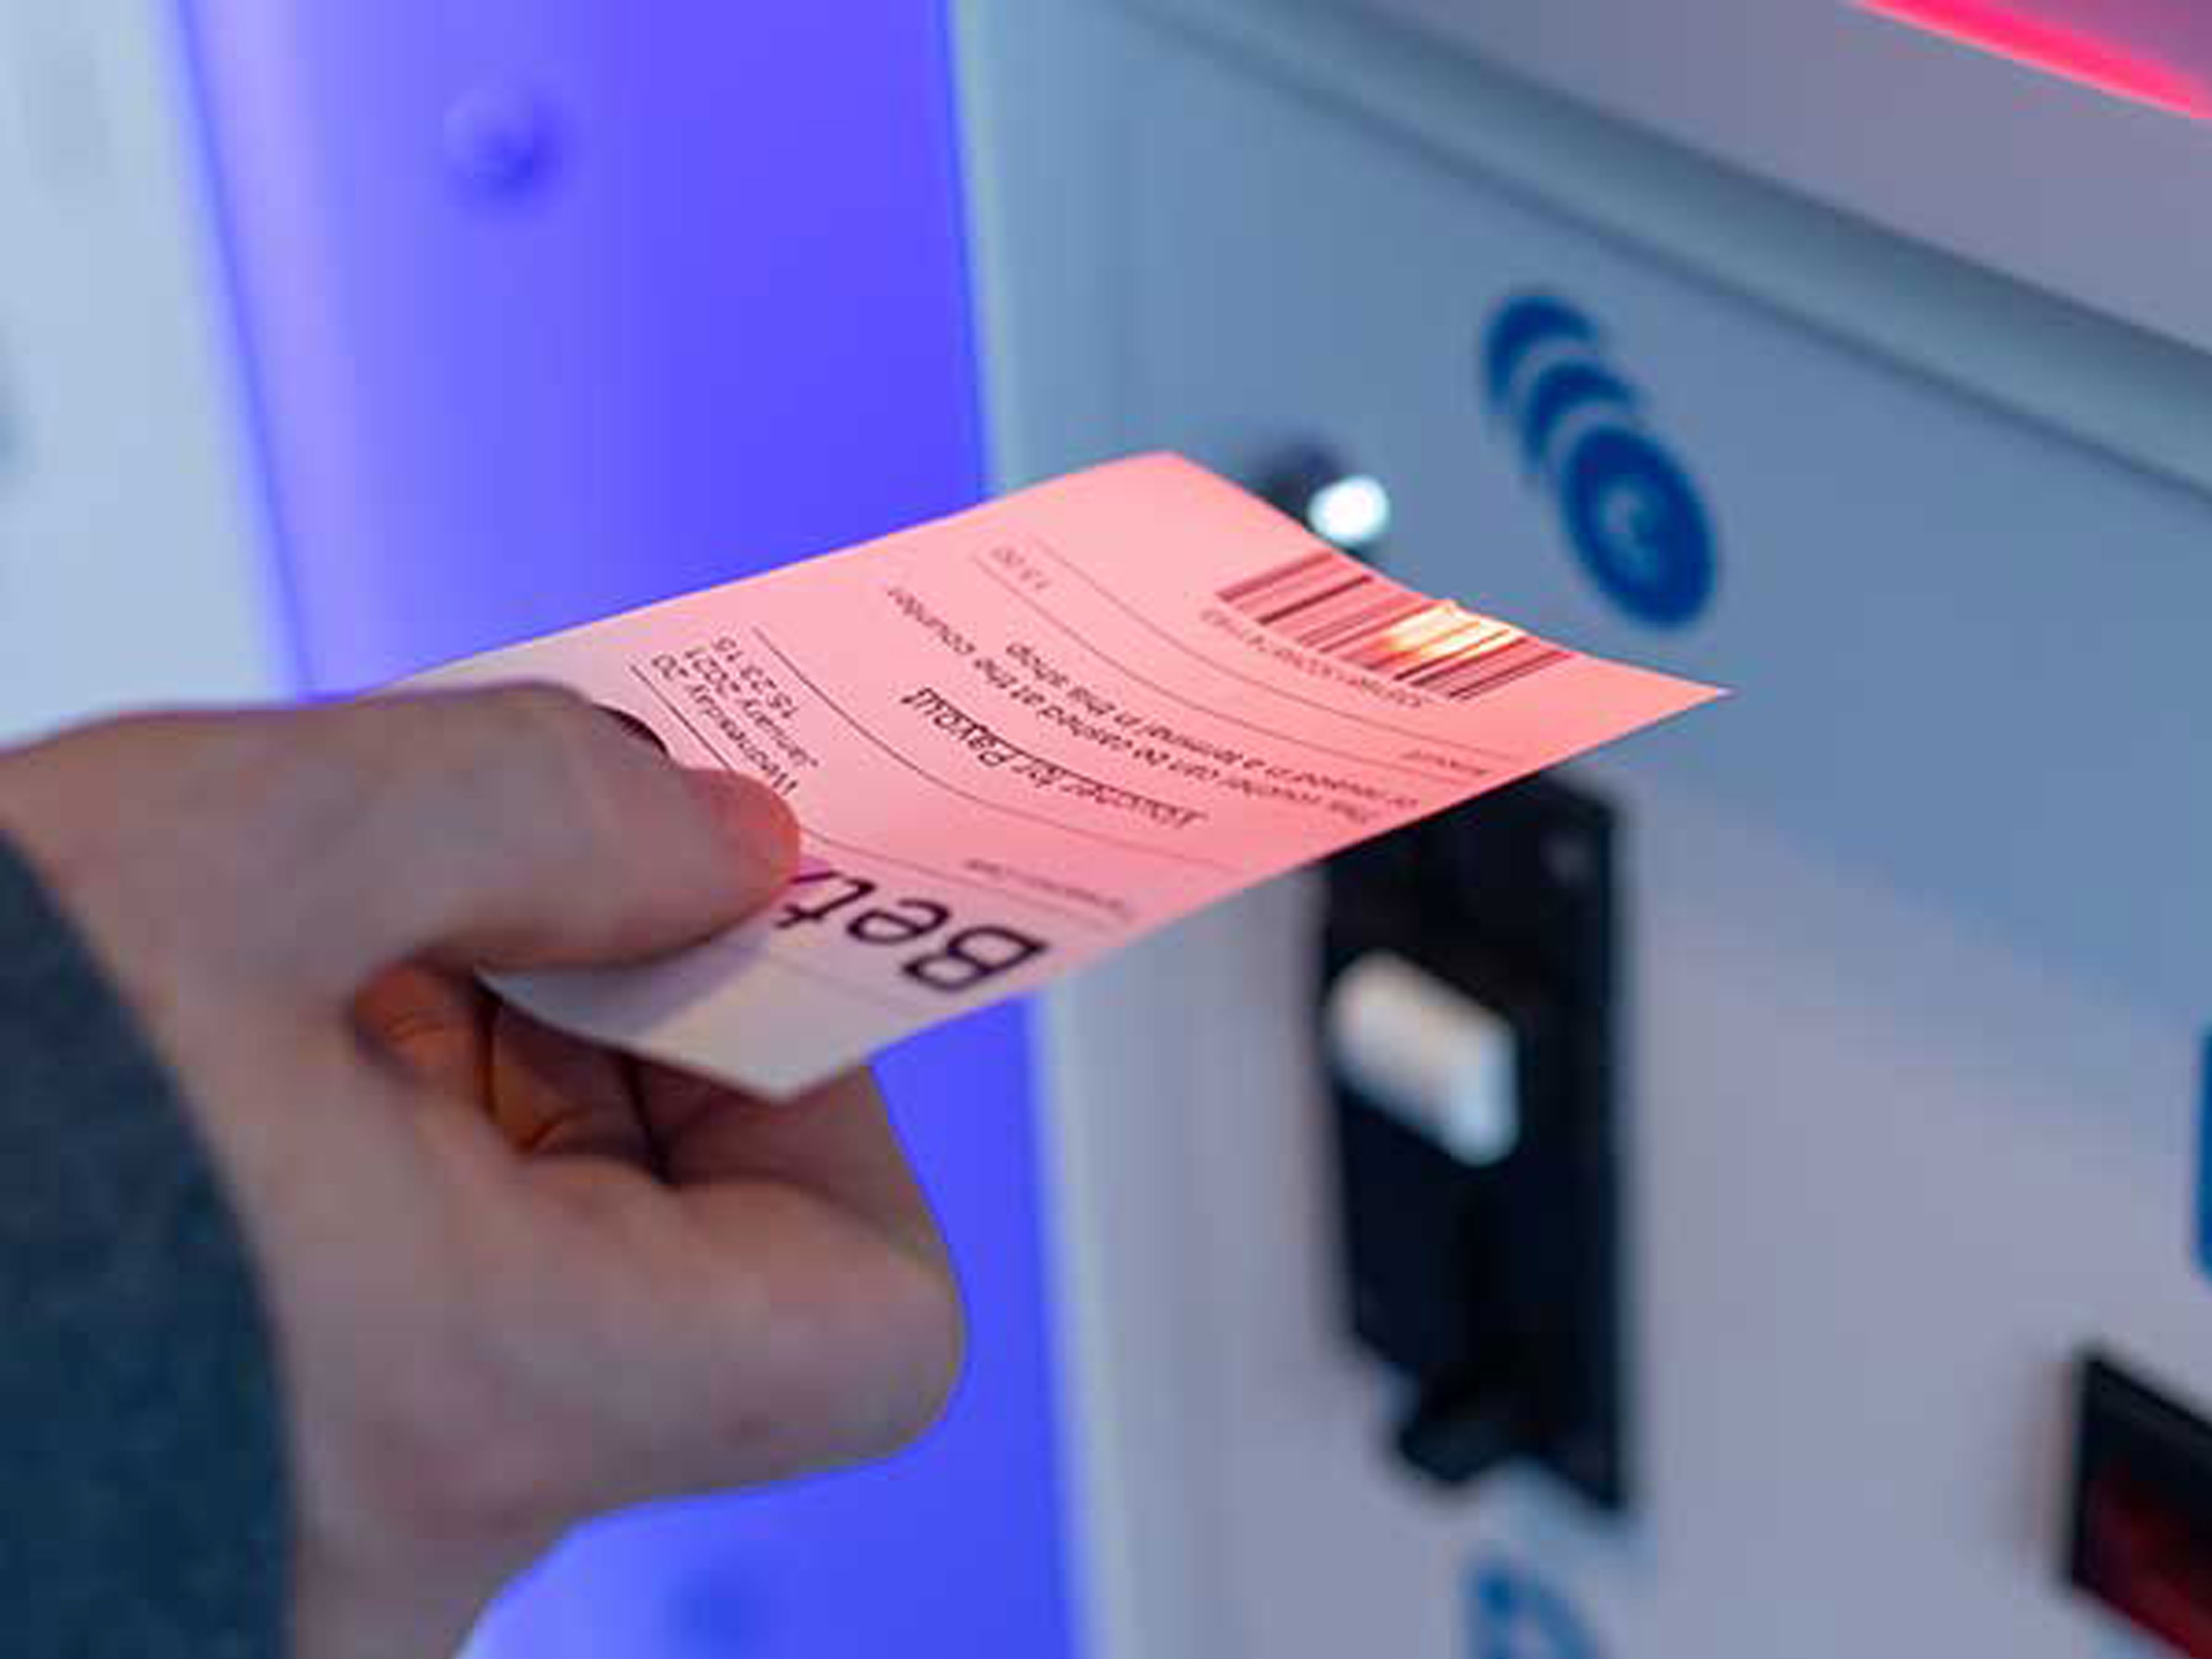 User scanning a ticket with Zebra's scanner